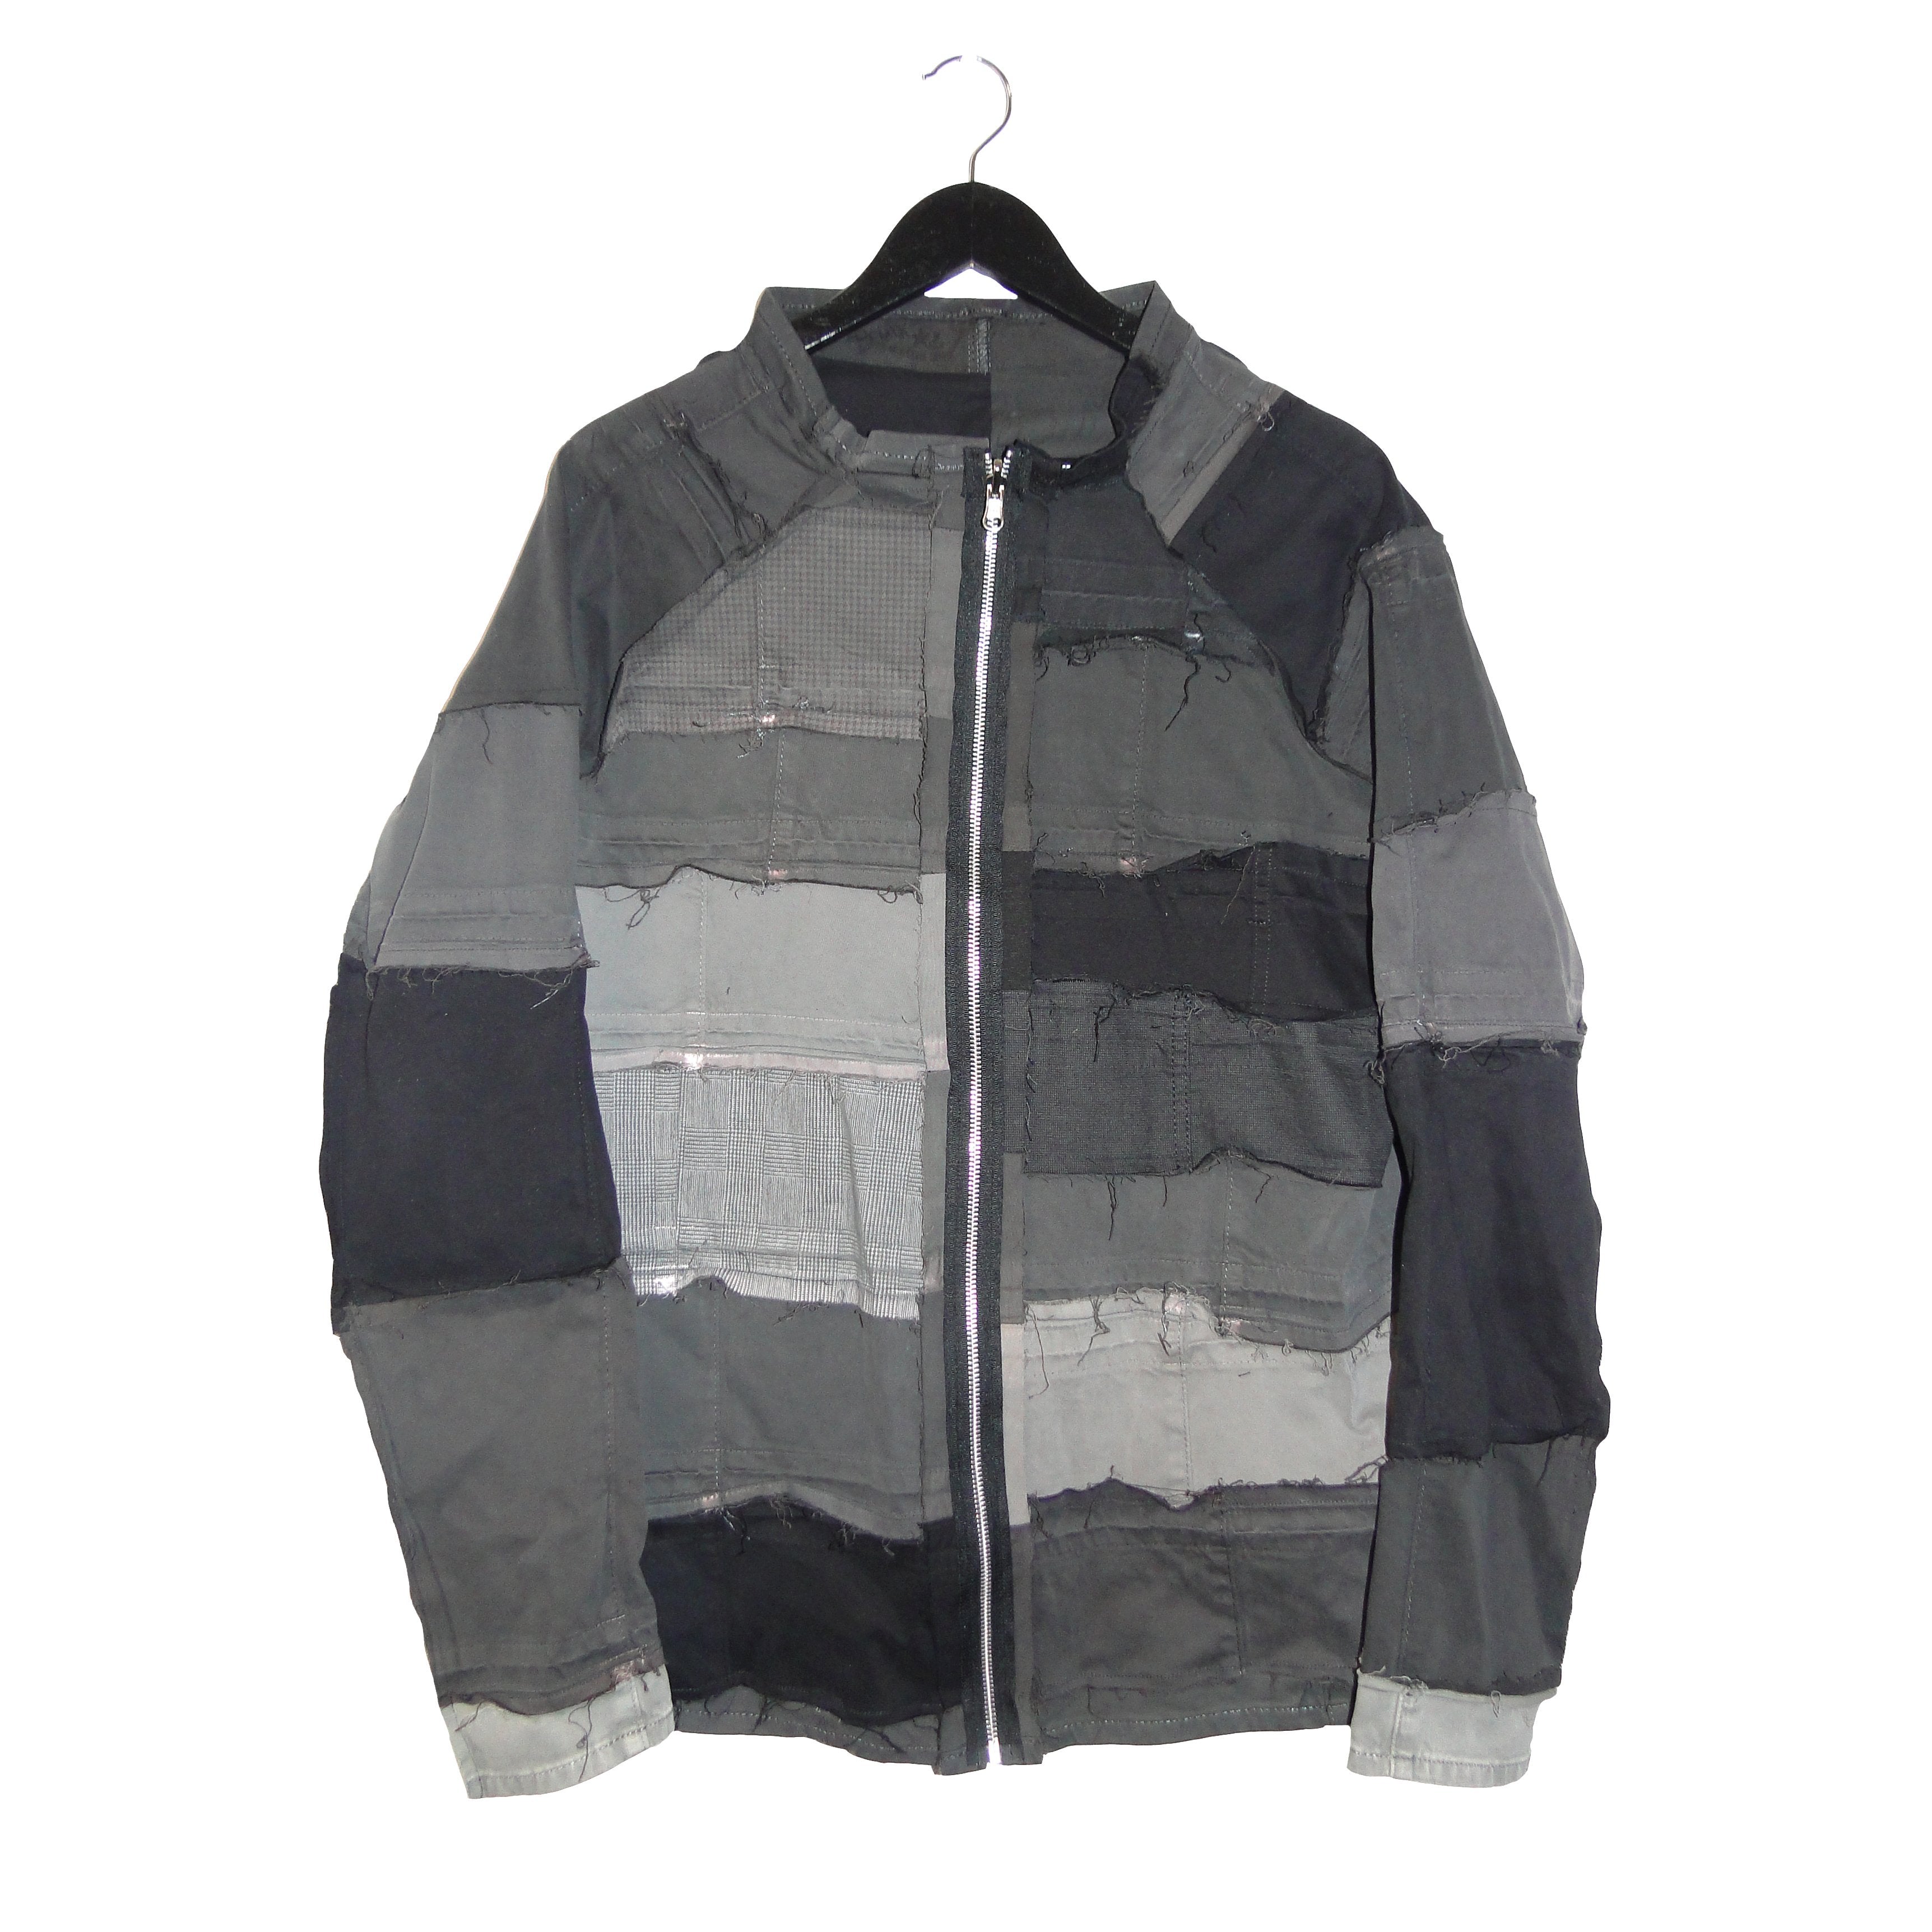 #REMIXbyStevieLeigh gray upcycled denim jacket